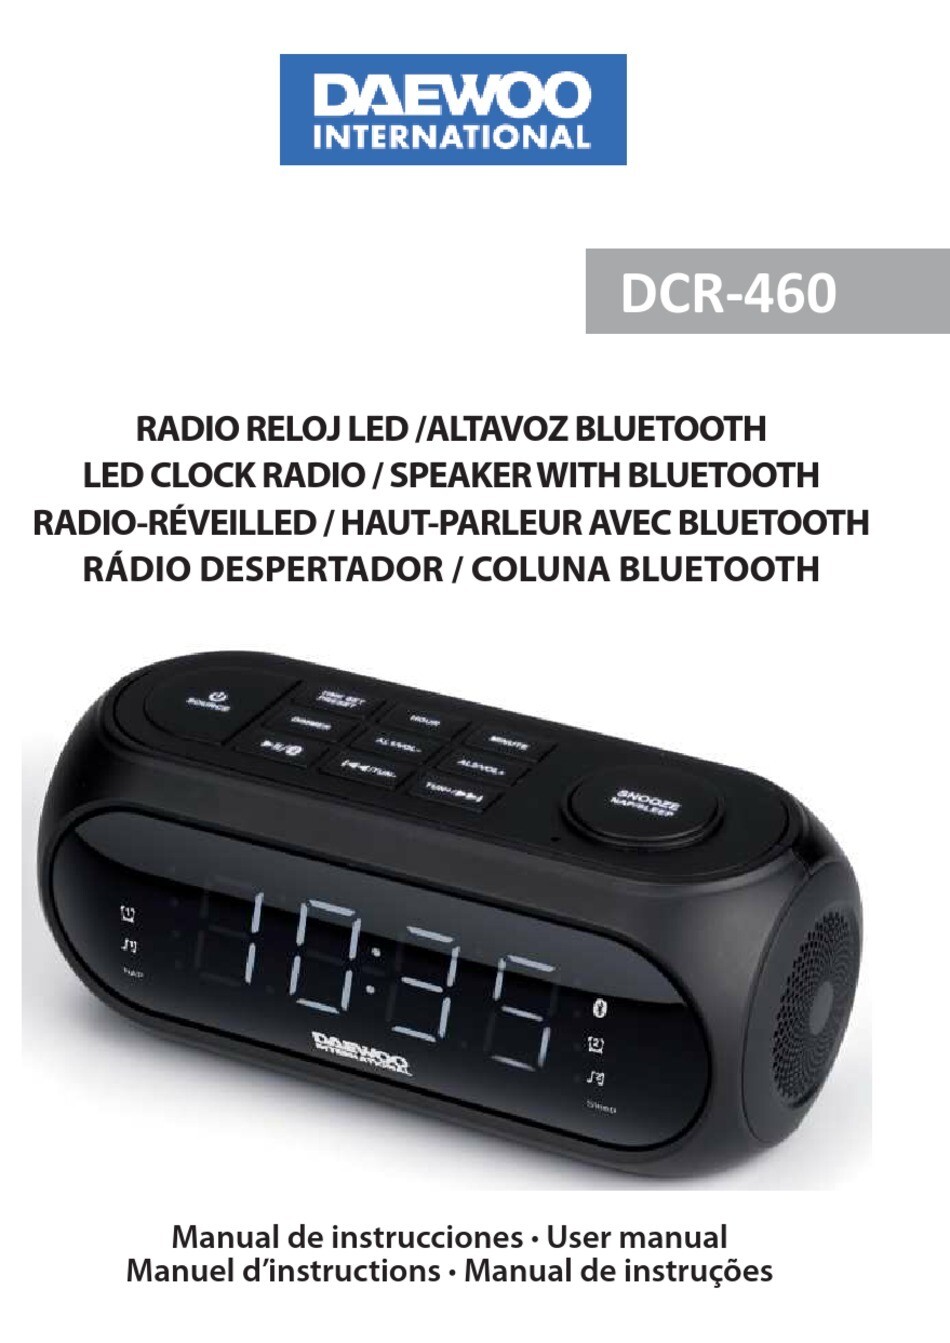 RADIO RELOJ despertador DAEWOO DCR-460 BLUETOOTH + USB FM Pantalla LED Alarma Dual